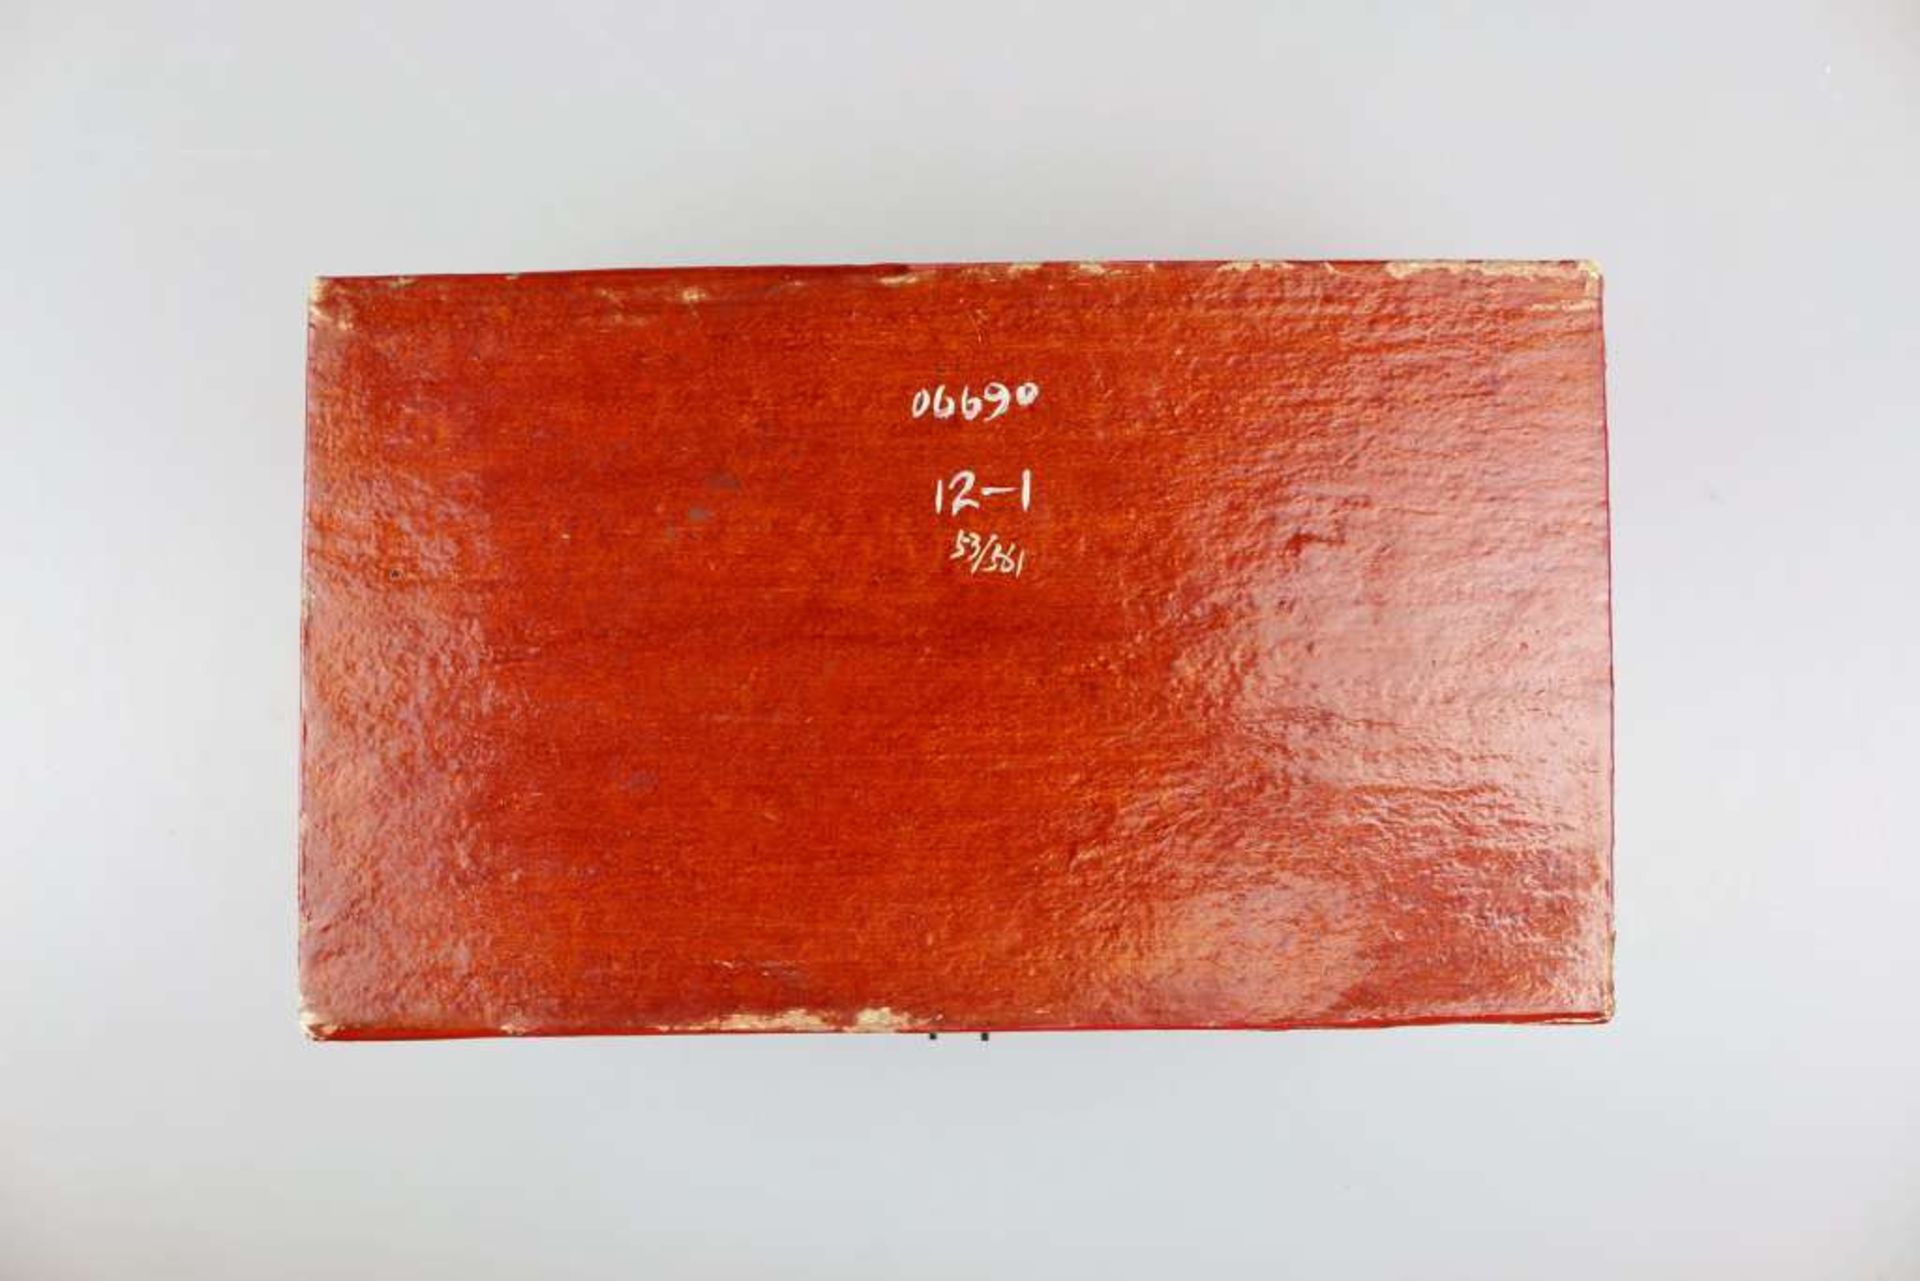 China, Lacktruhe, 19./20. Jh., Holzkern mit dünner Lederbespannung, außen anschließend lacki - Bild 4 aus 4